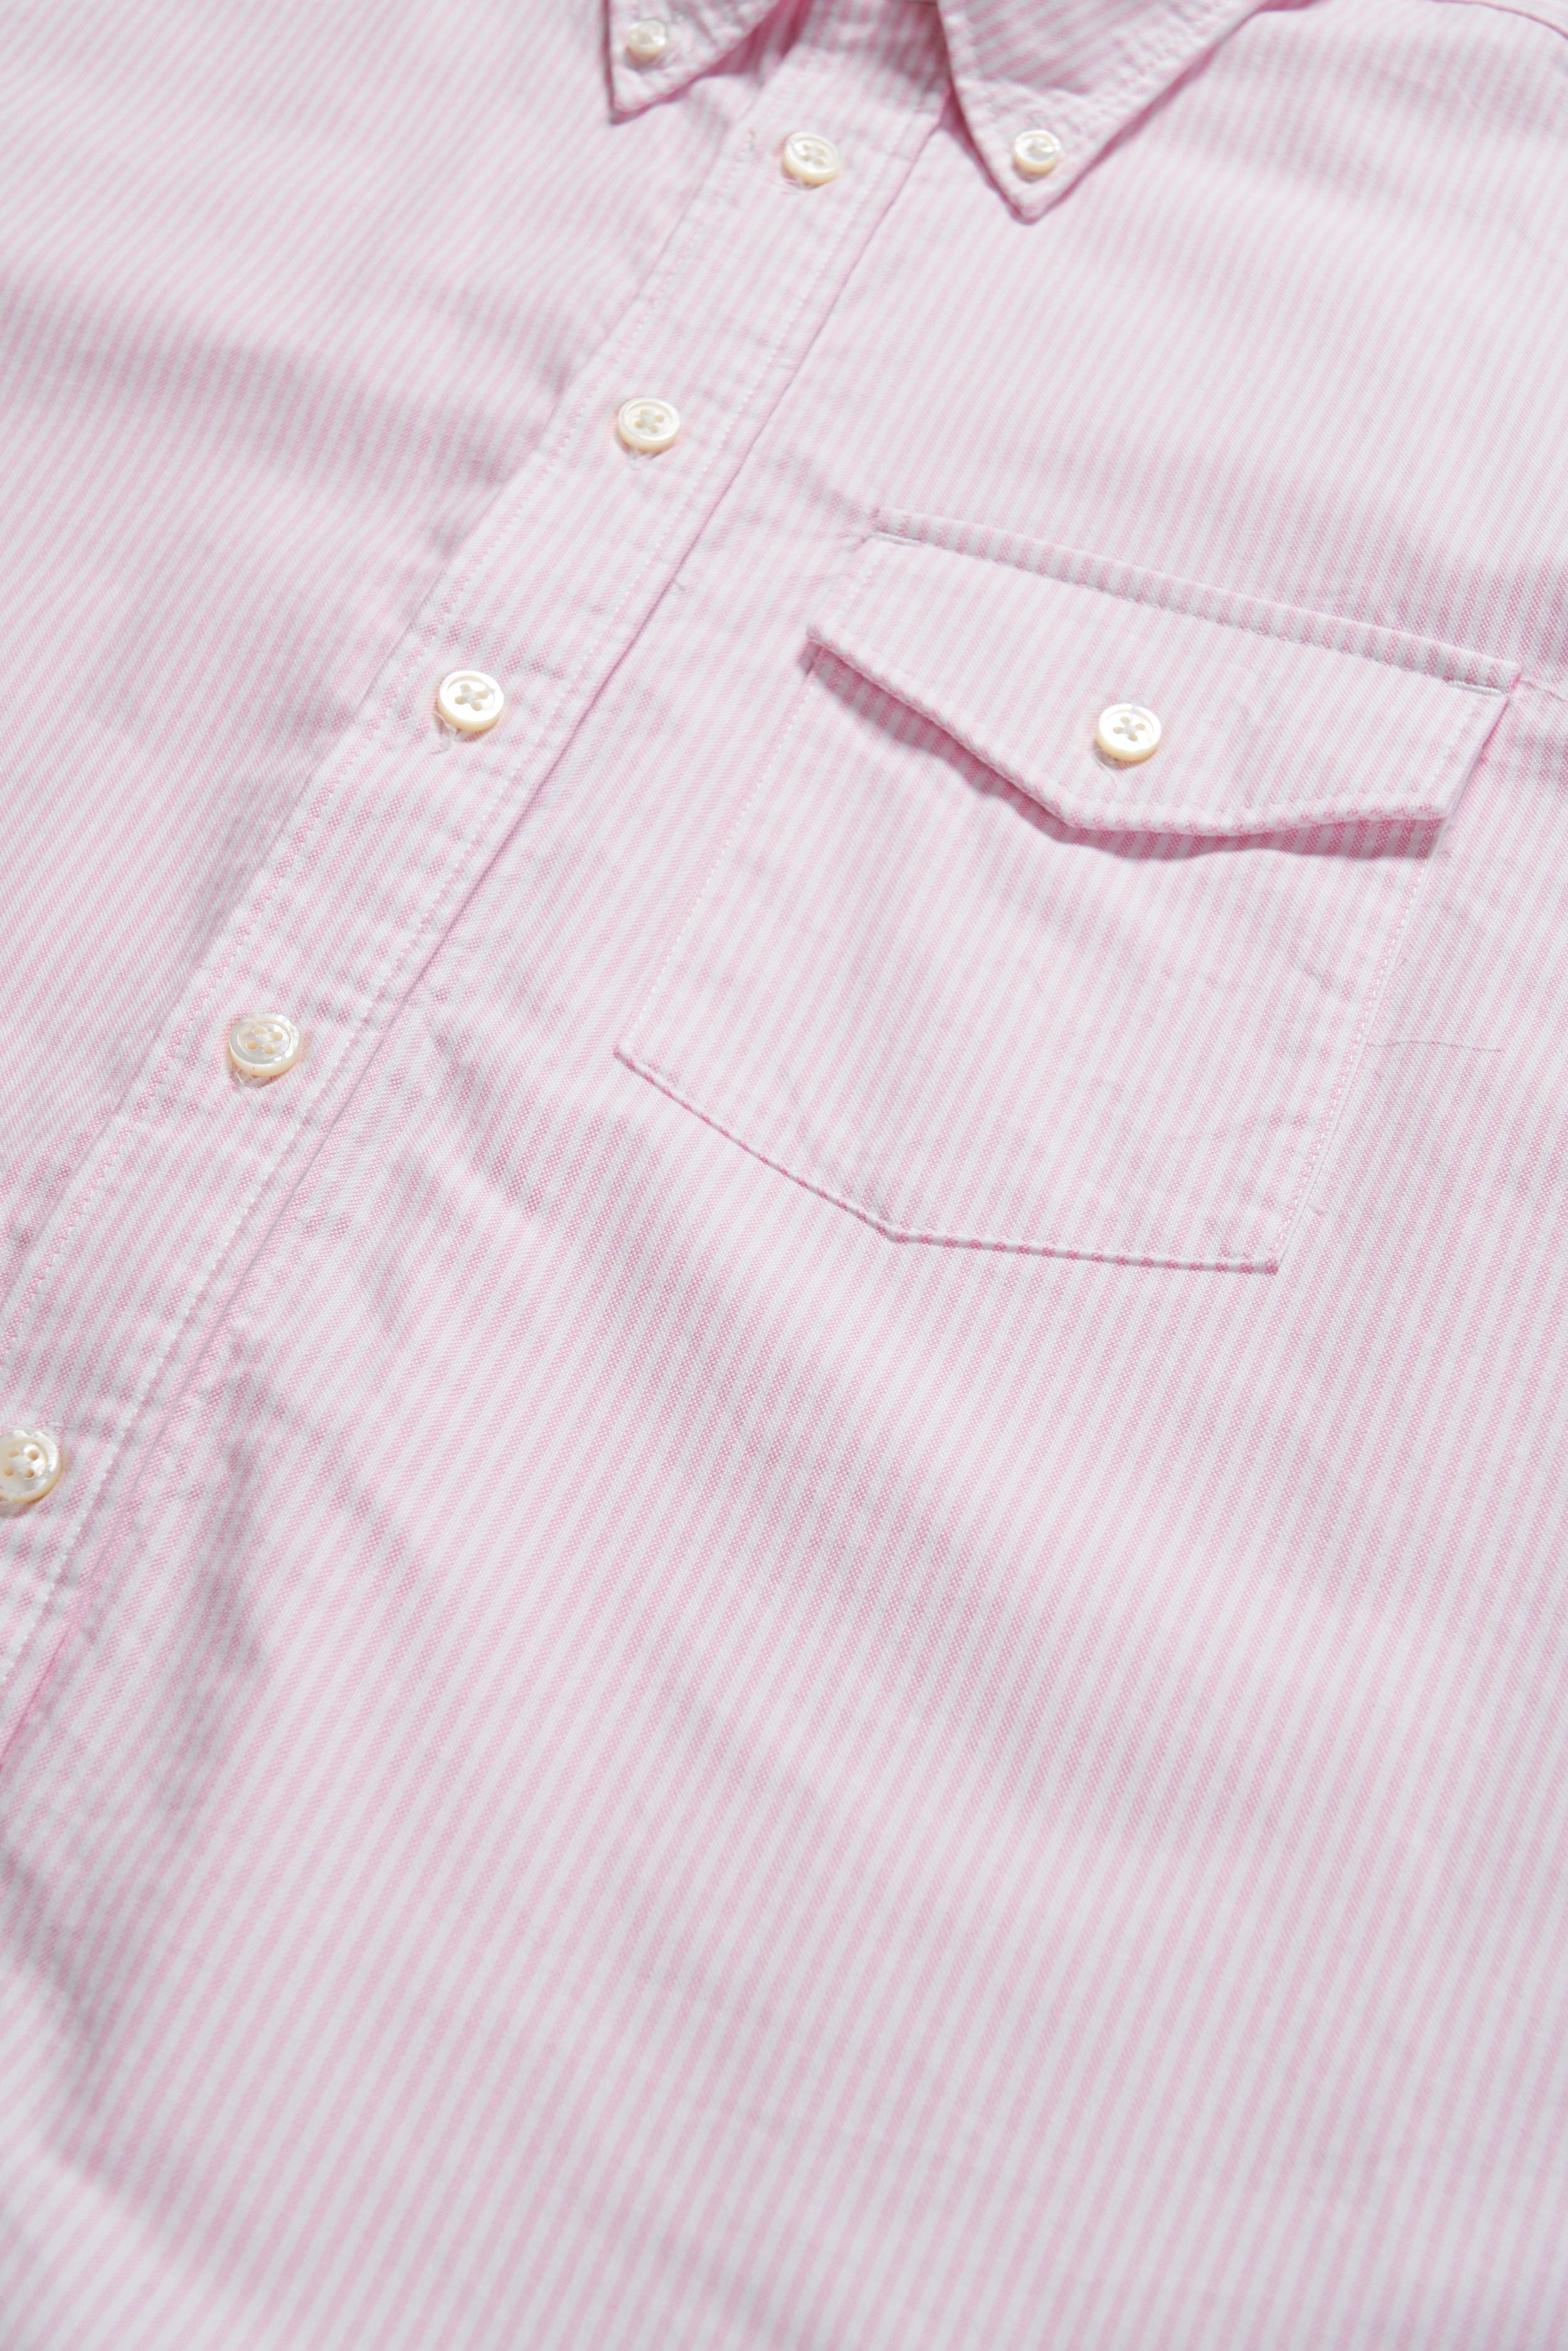 Ivy BD Shirt - Pink Candy Stripe Oxford